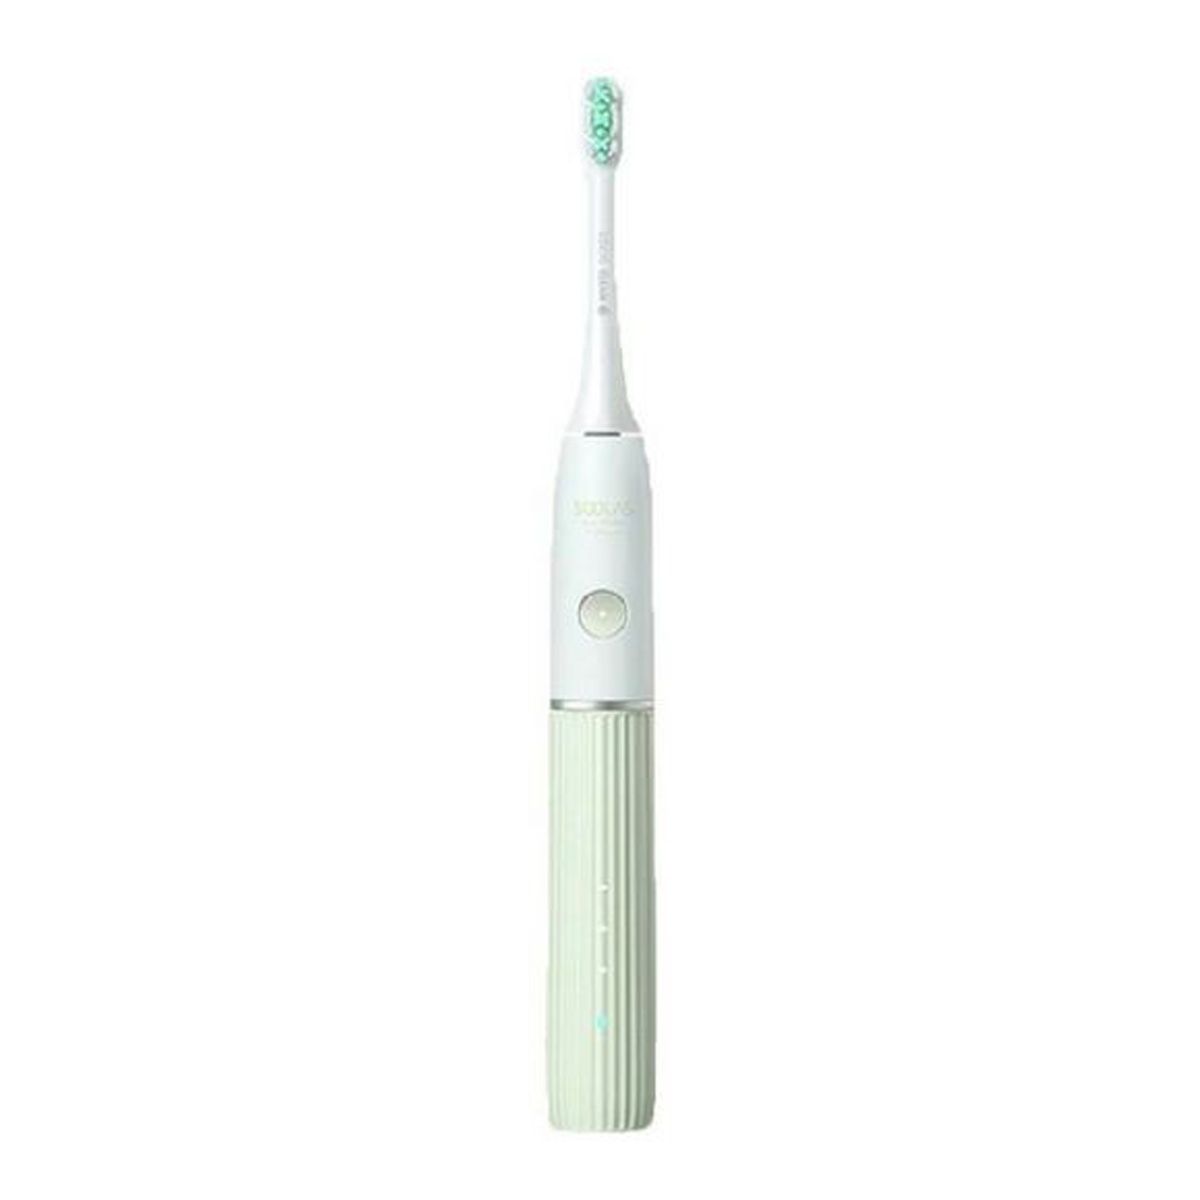 Soocas V2 Electric Toothbrush แปรงสีฟันโซนิคไฟฟ้า -Green